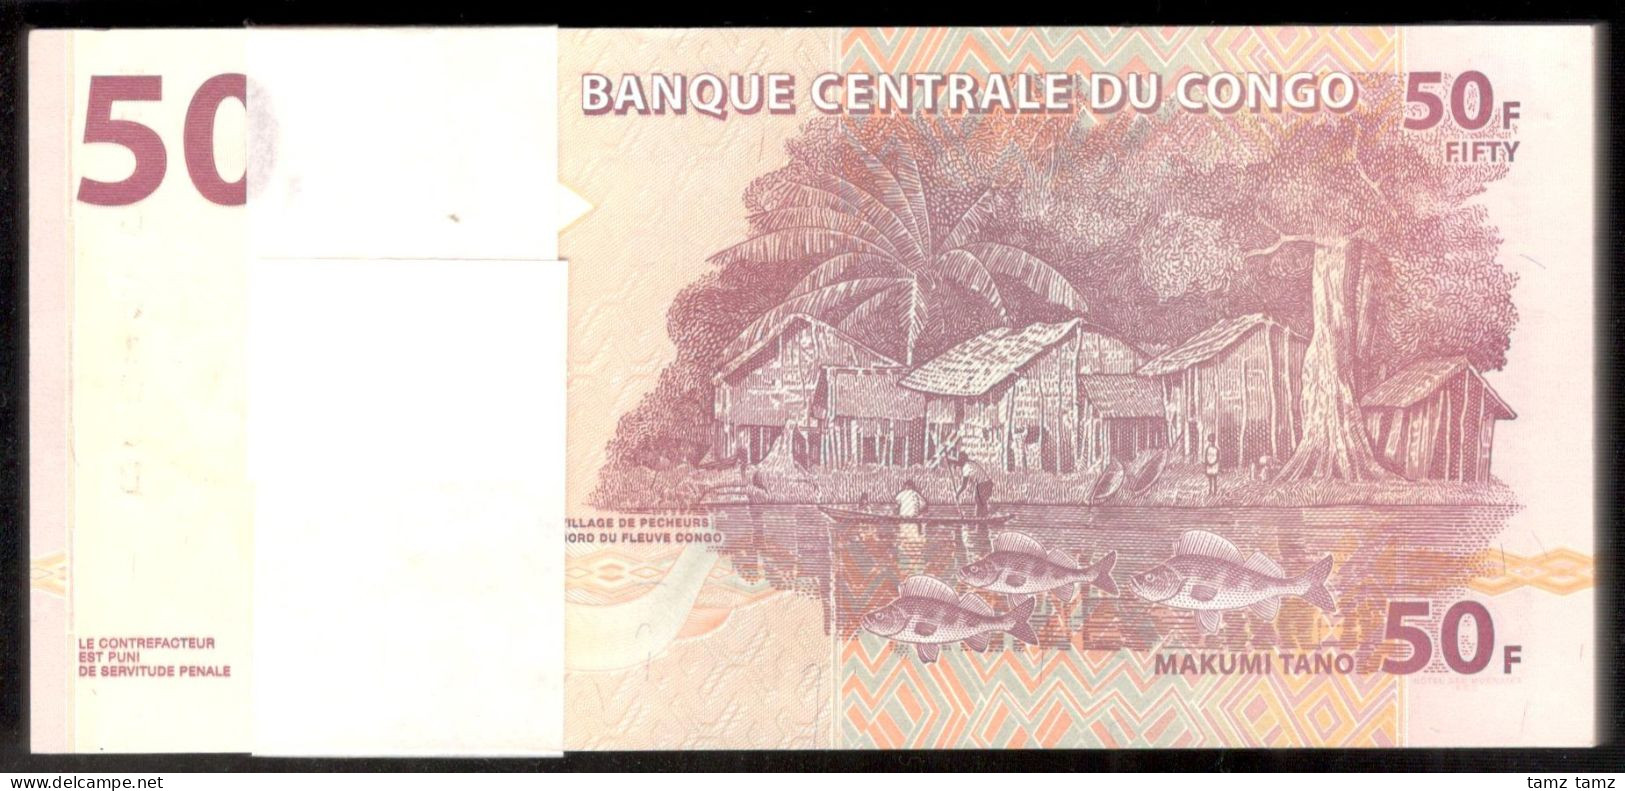 Lot 100 Pcs 1 Bundle Consecutive Congo 50 Francs 2013 UNC - Republic Of Congo (Congo-Brazzaville)